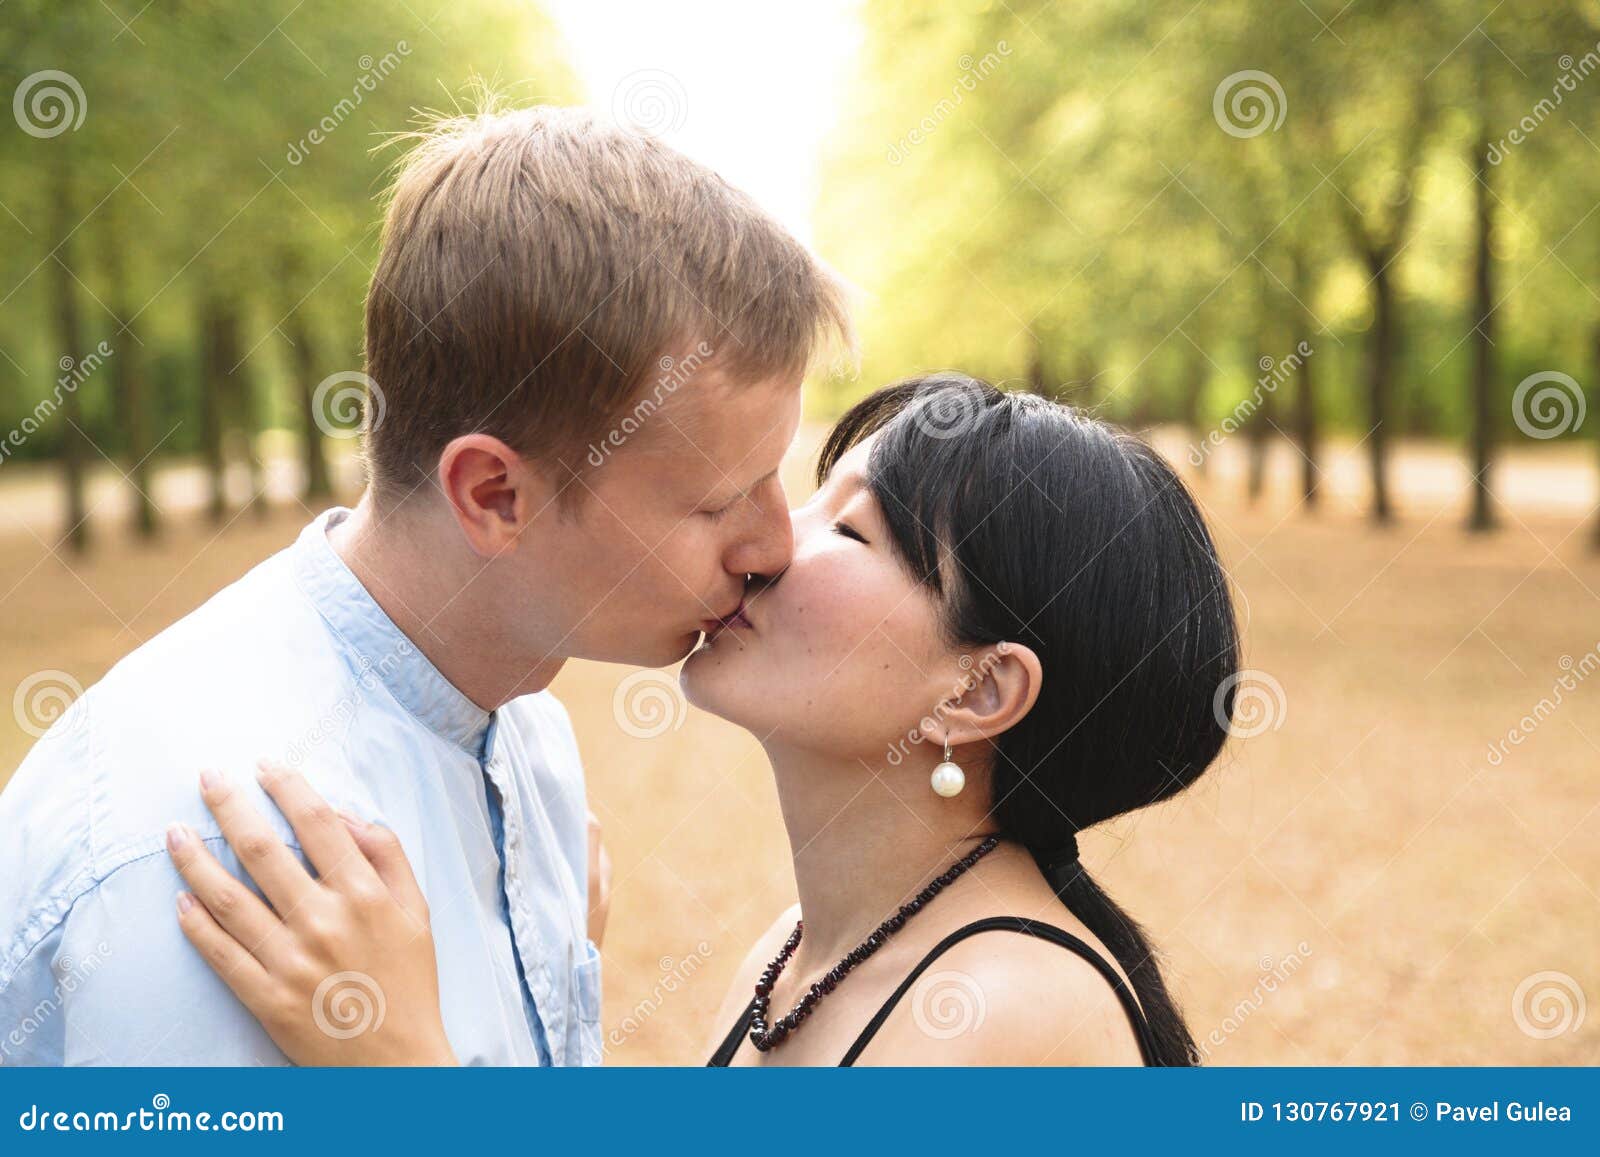 https://thumbs.dreamstime.com/z/international-couple-love-beautiful-park-passion-kiss-caucasian-man-asian-woman-outdoor-130767921.jpg